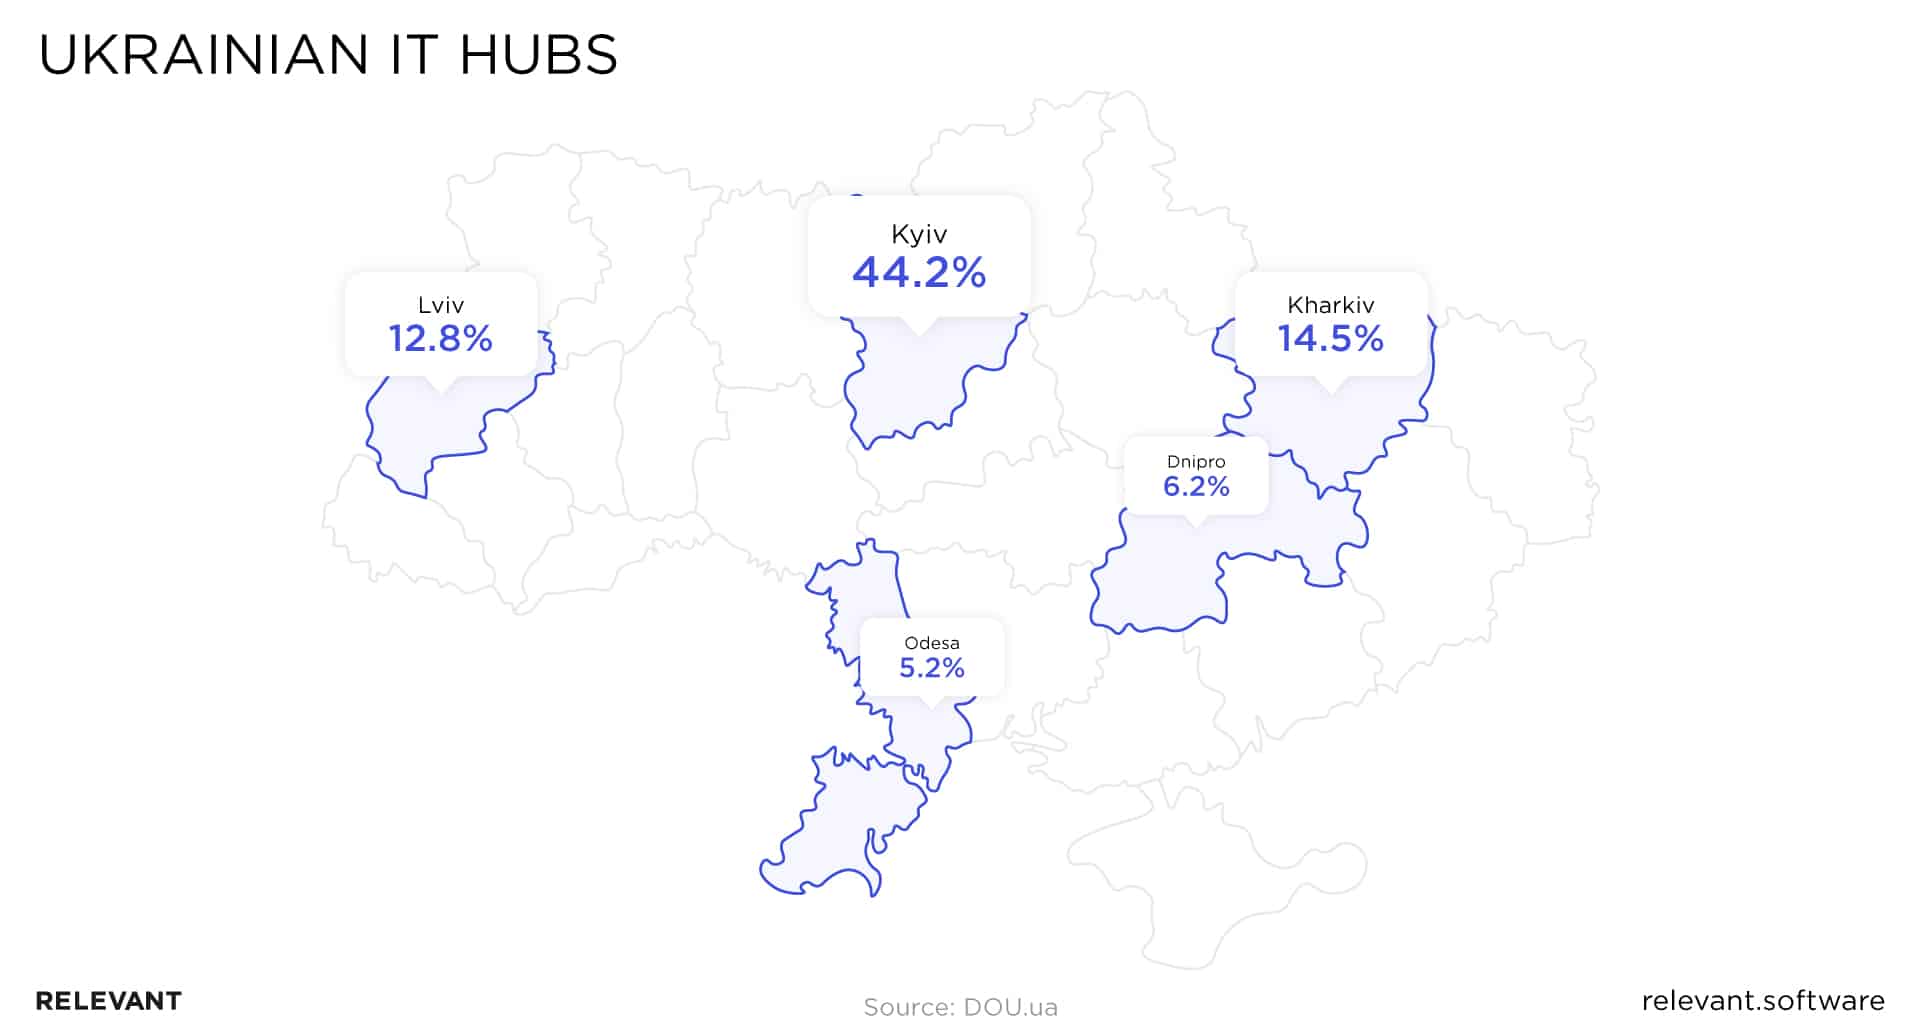 Ukrainian IT hubs: Lviv, Kyiv, Kharkiv, Odesa, Dnipro